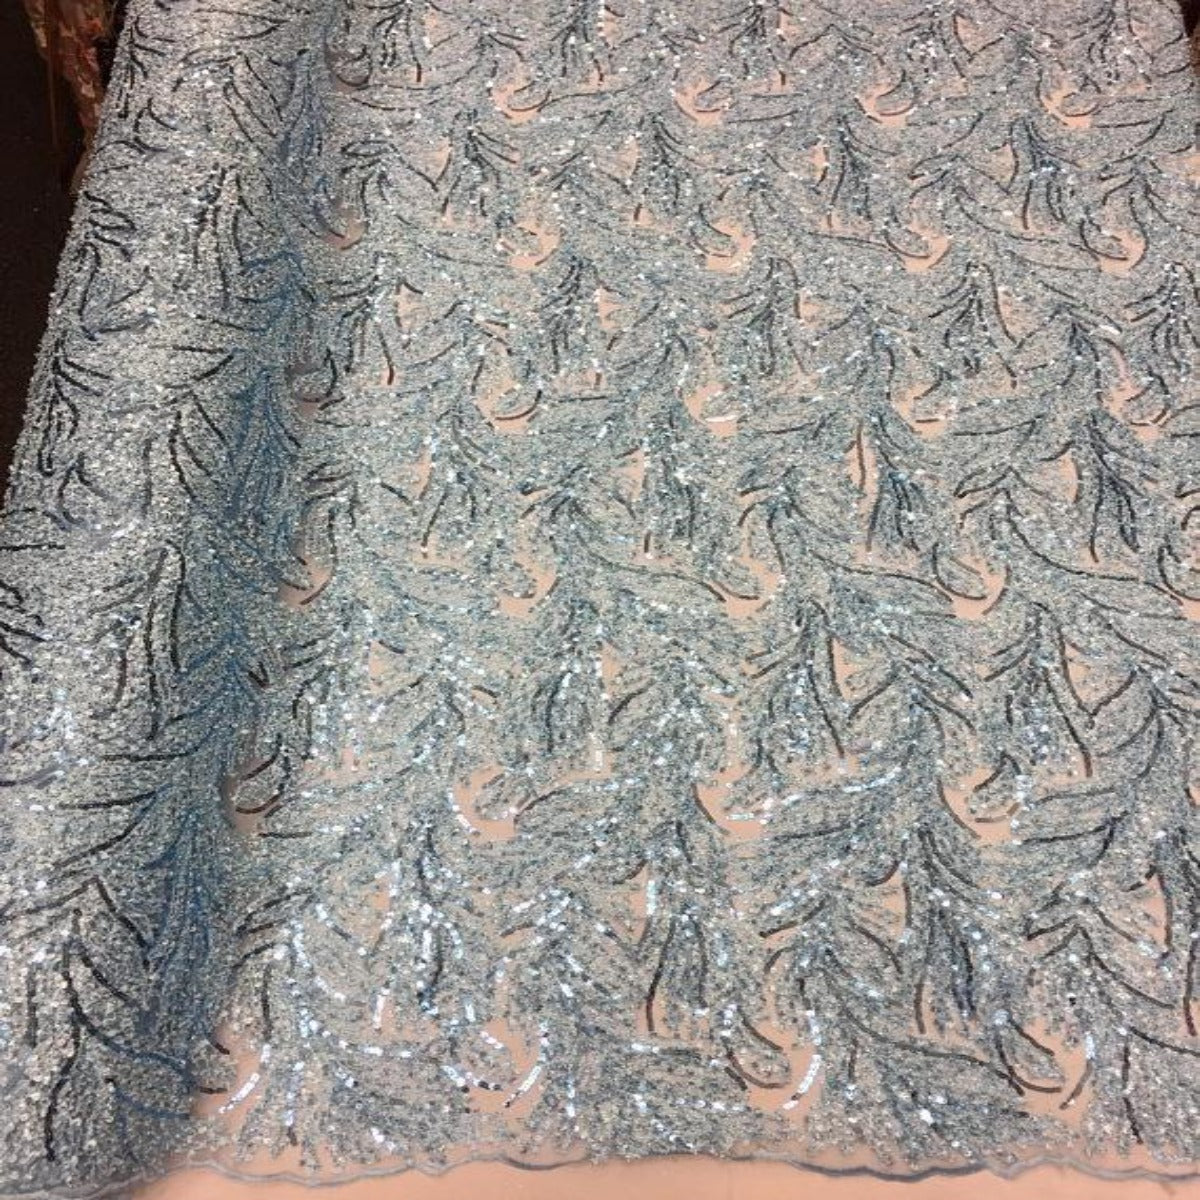 Ivory Cozy Pop Thread Floral Sequins Lace Fabric - Fashion Fabrics LLC